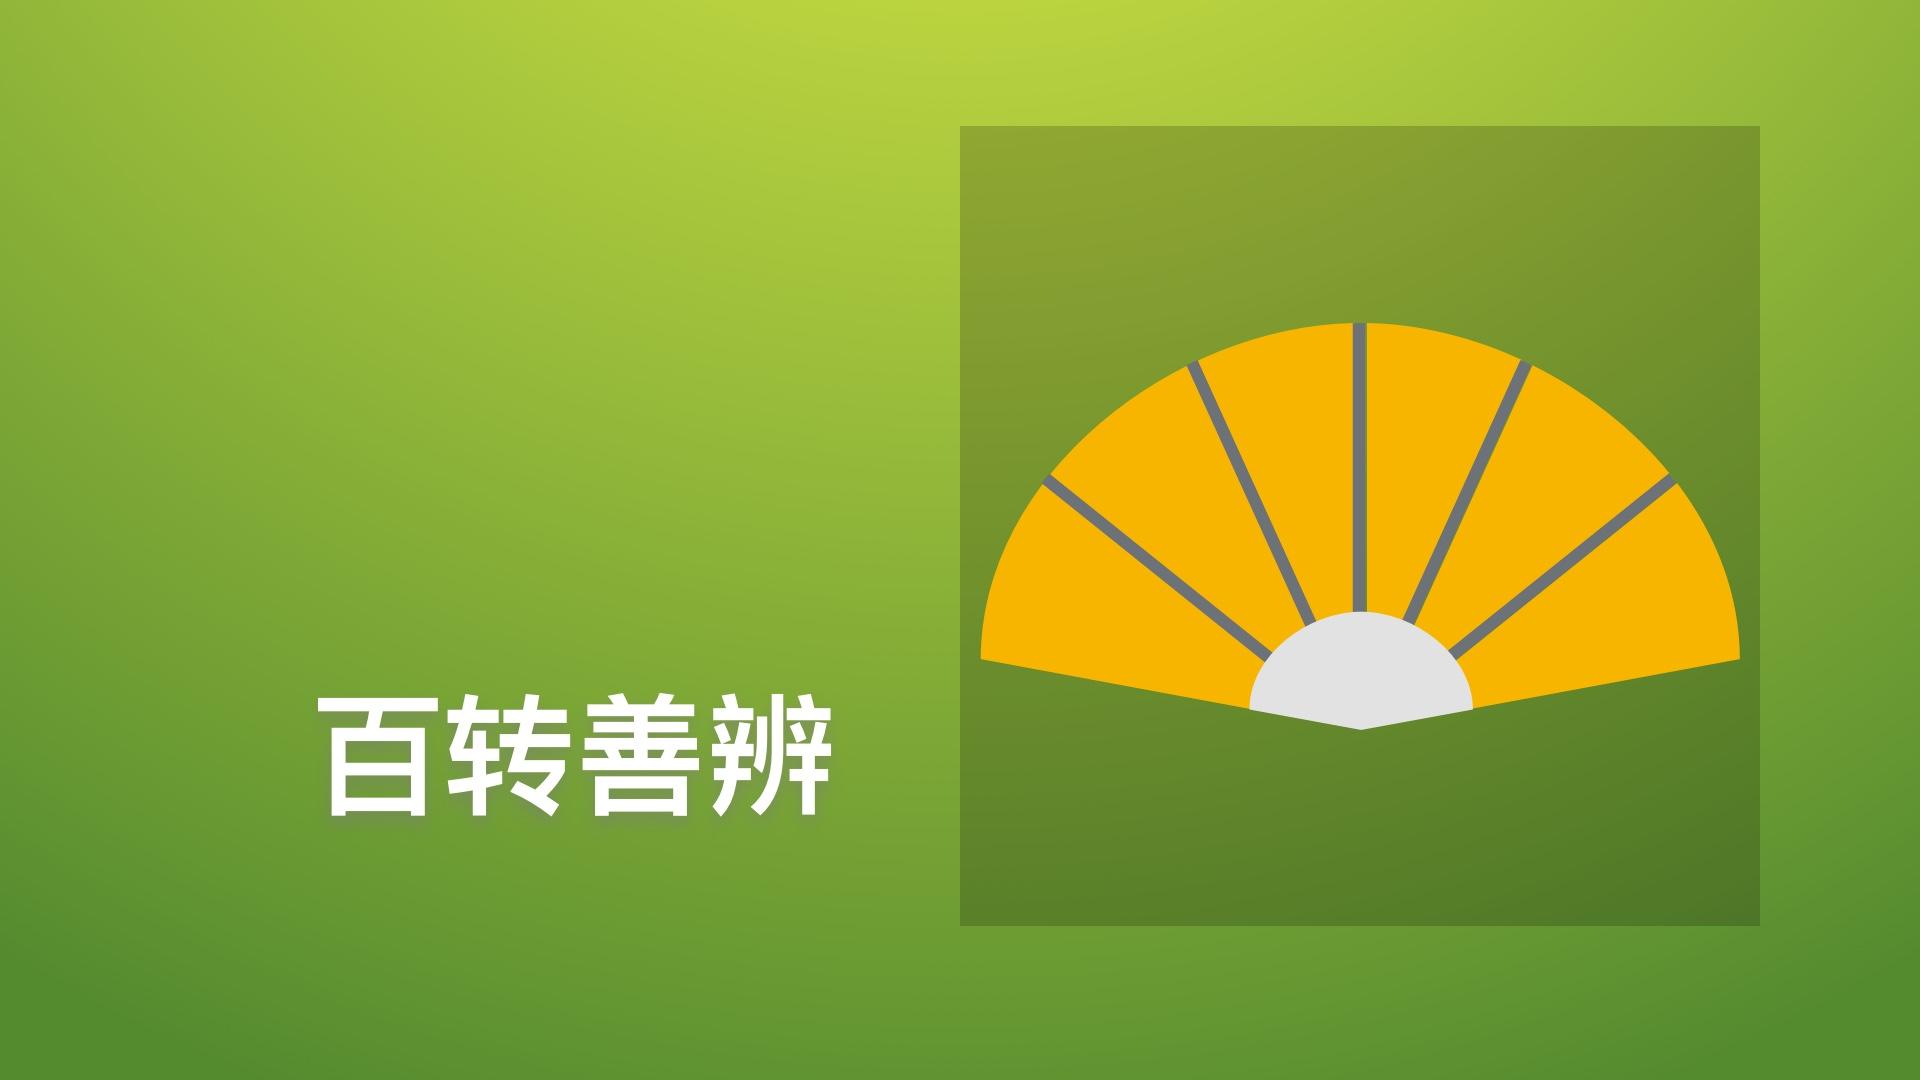 Banner of 旋轉風扇 1.0.0